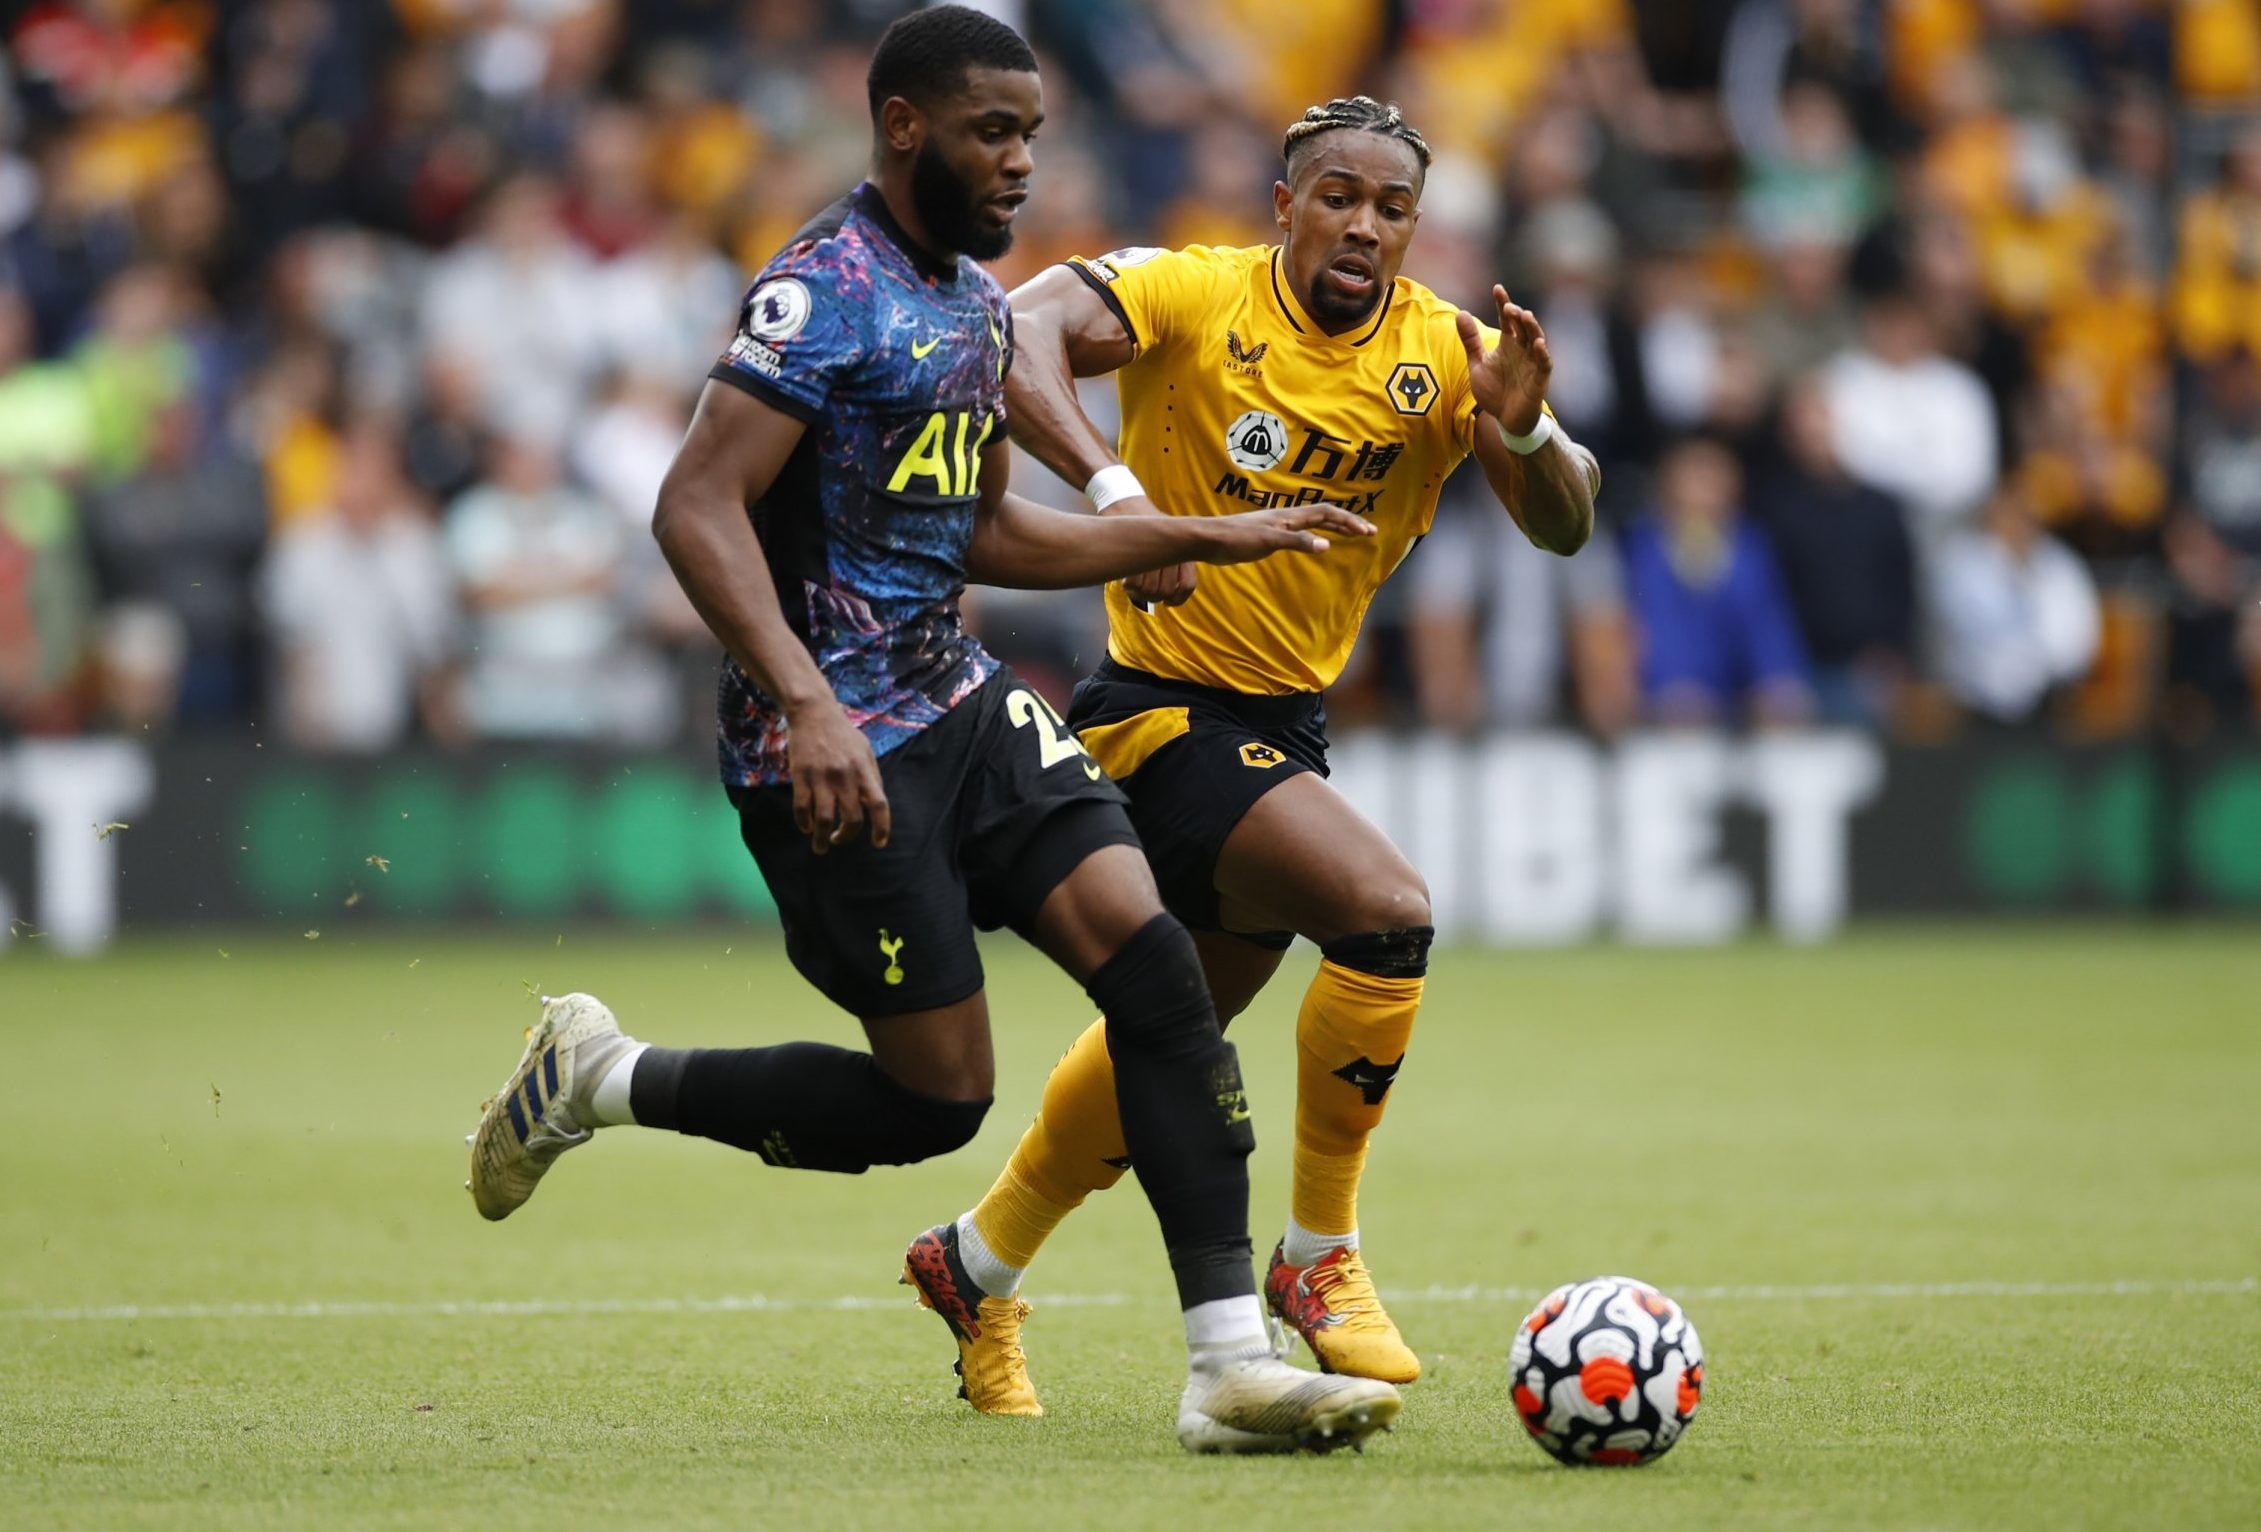 Tottenham Hotspur defender Japhet Tanganga on the ball against Wolves' Adama Traore in the Premier League